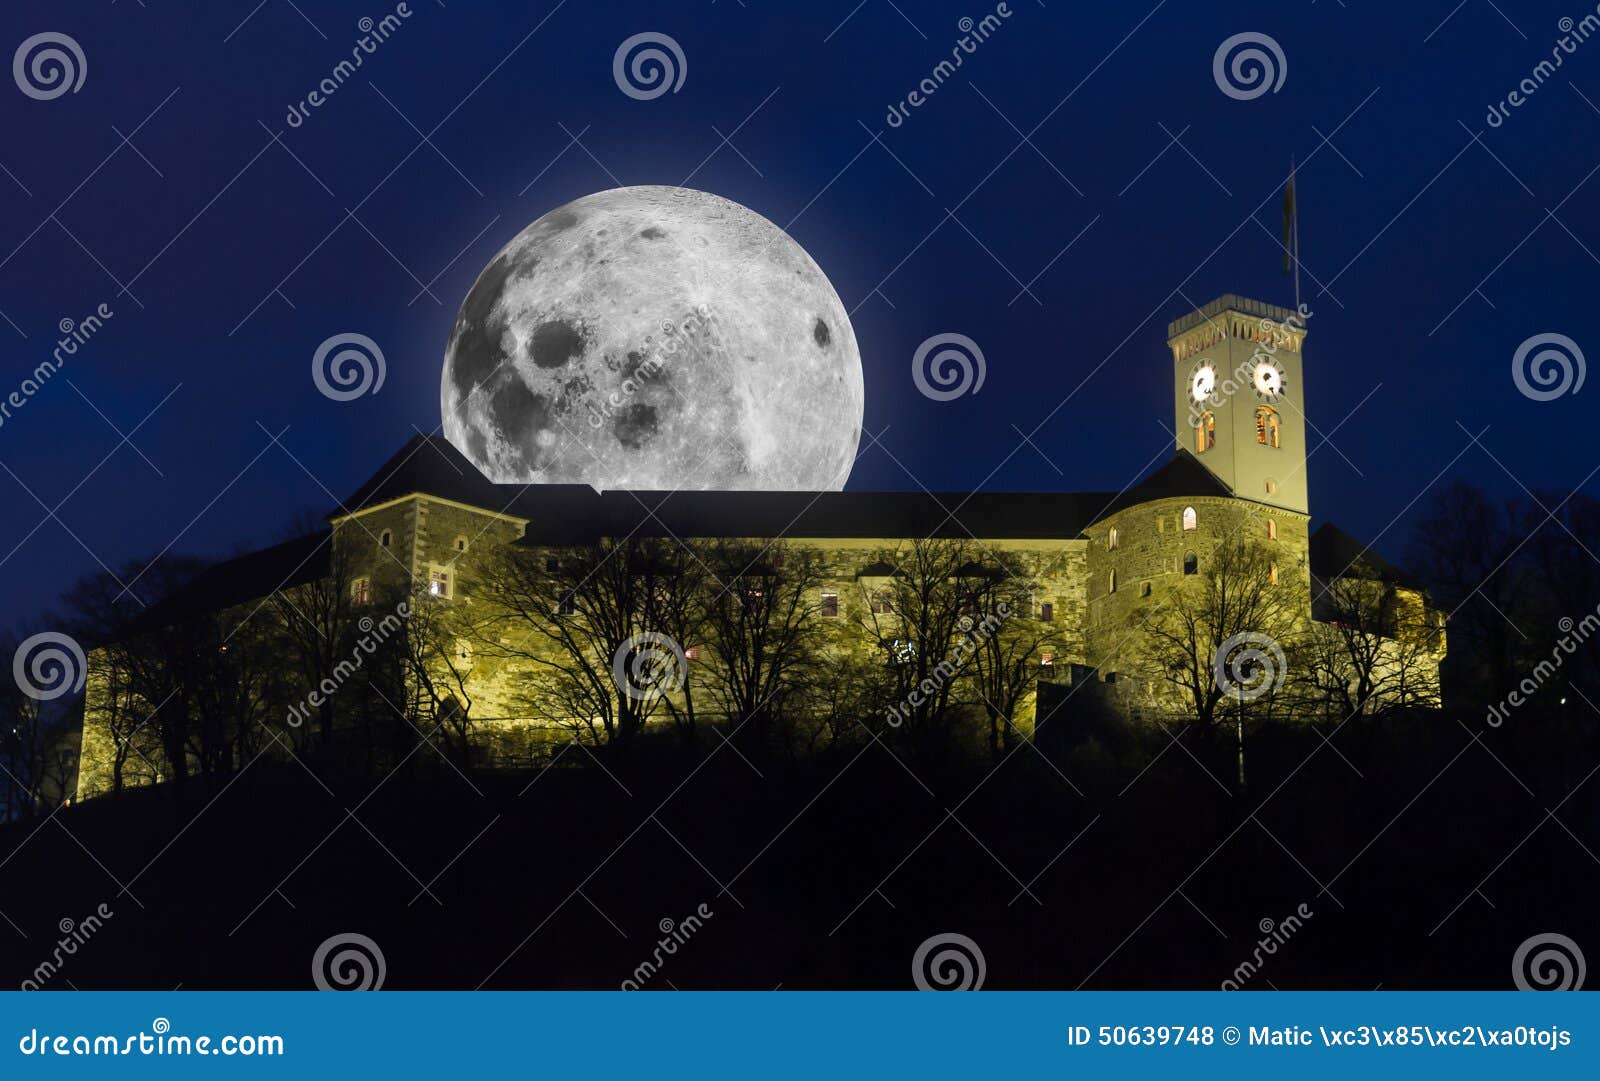 ljubljana castle with full moon